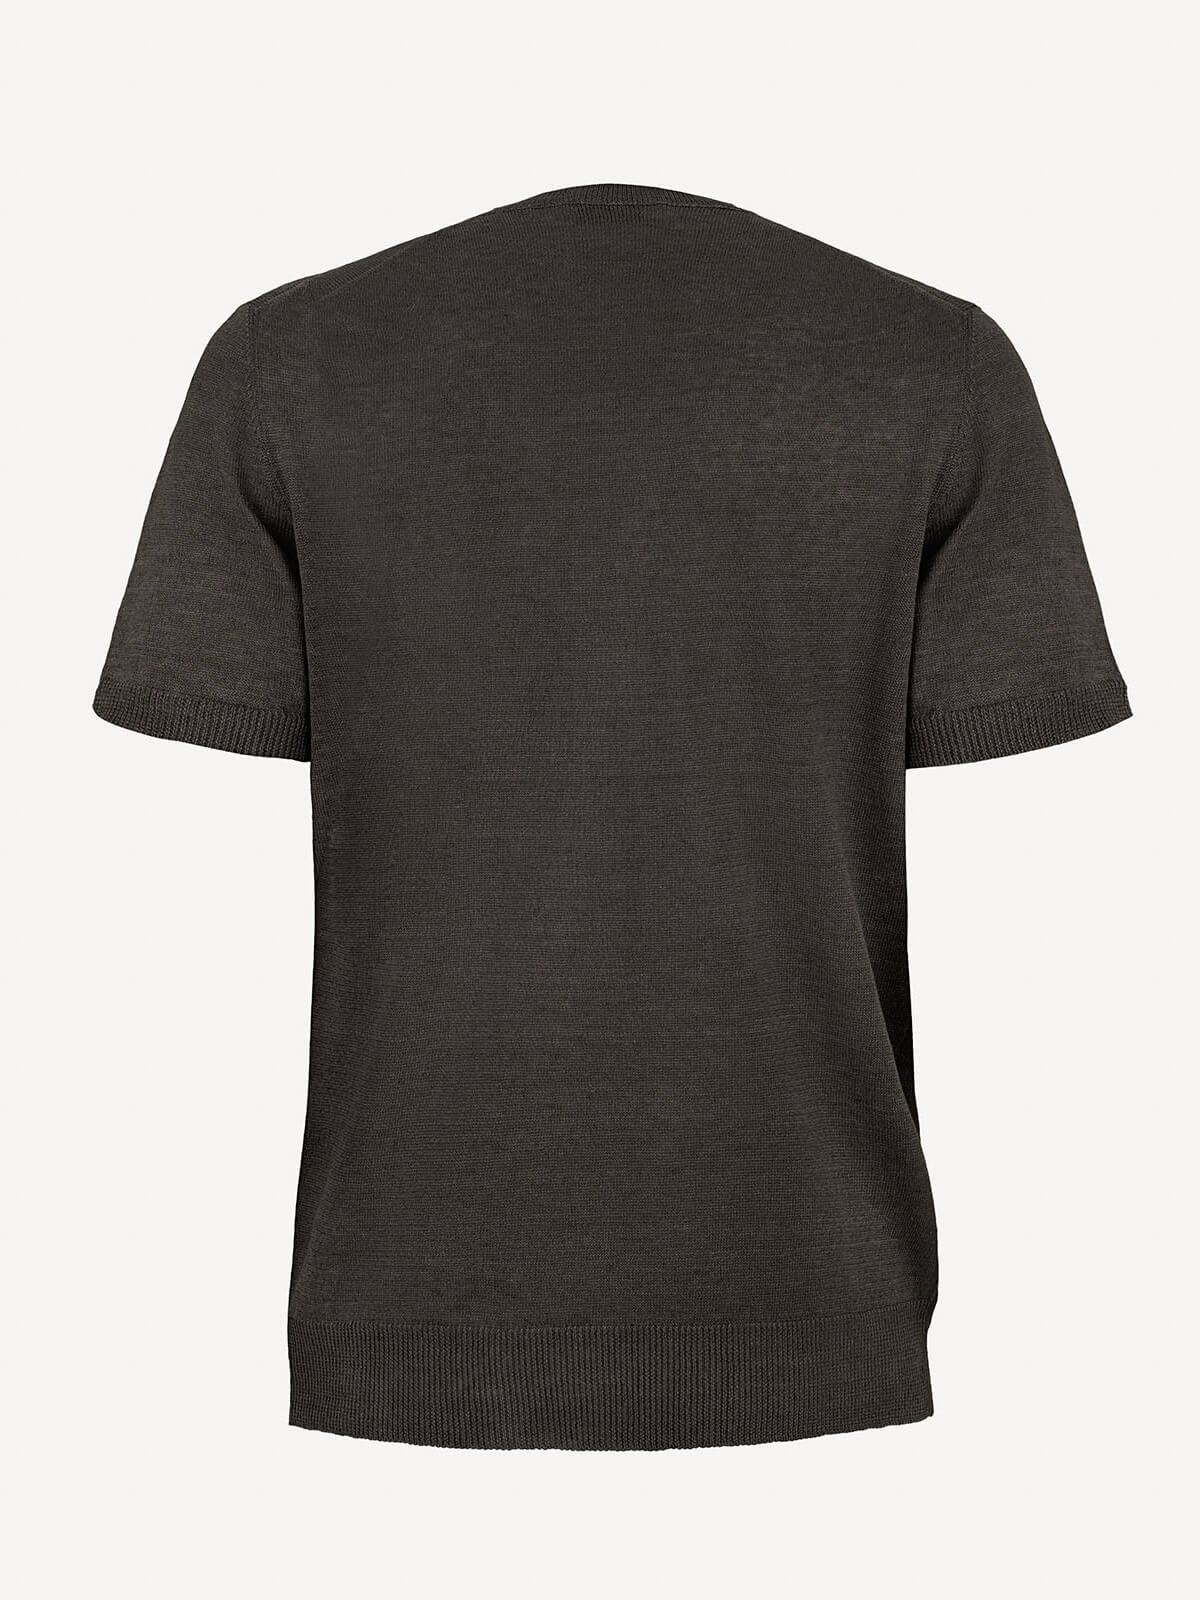 Linen tshirt for man dark grey color back view 100% Capri